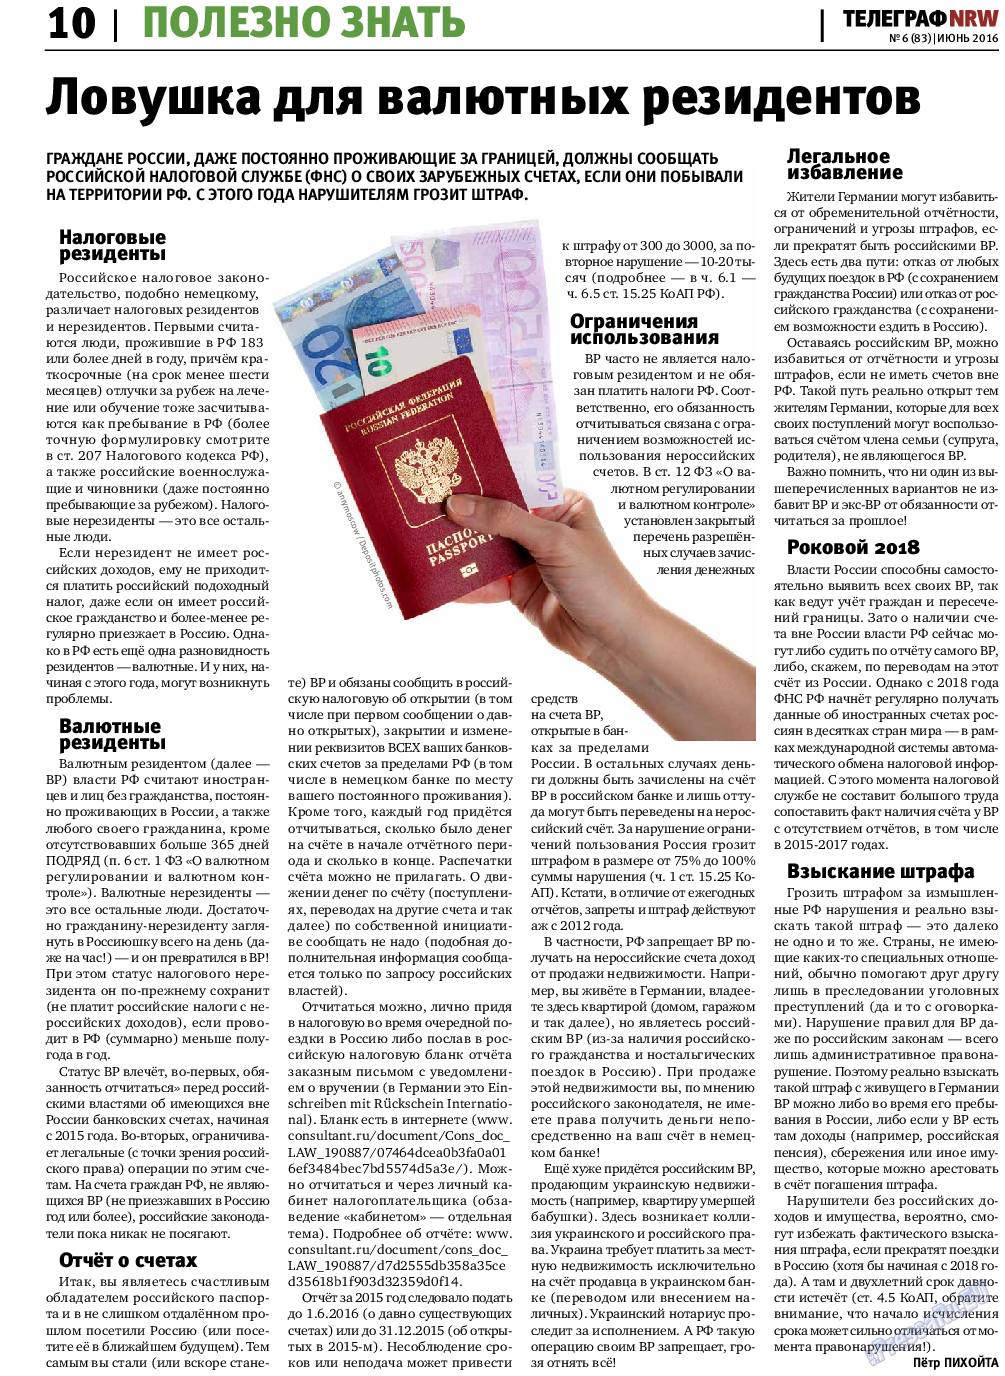 Телеграф NRW, газета. 2016 №6 стр.10